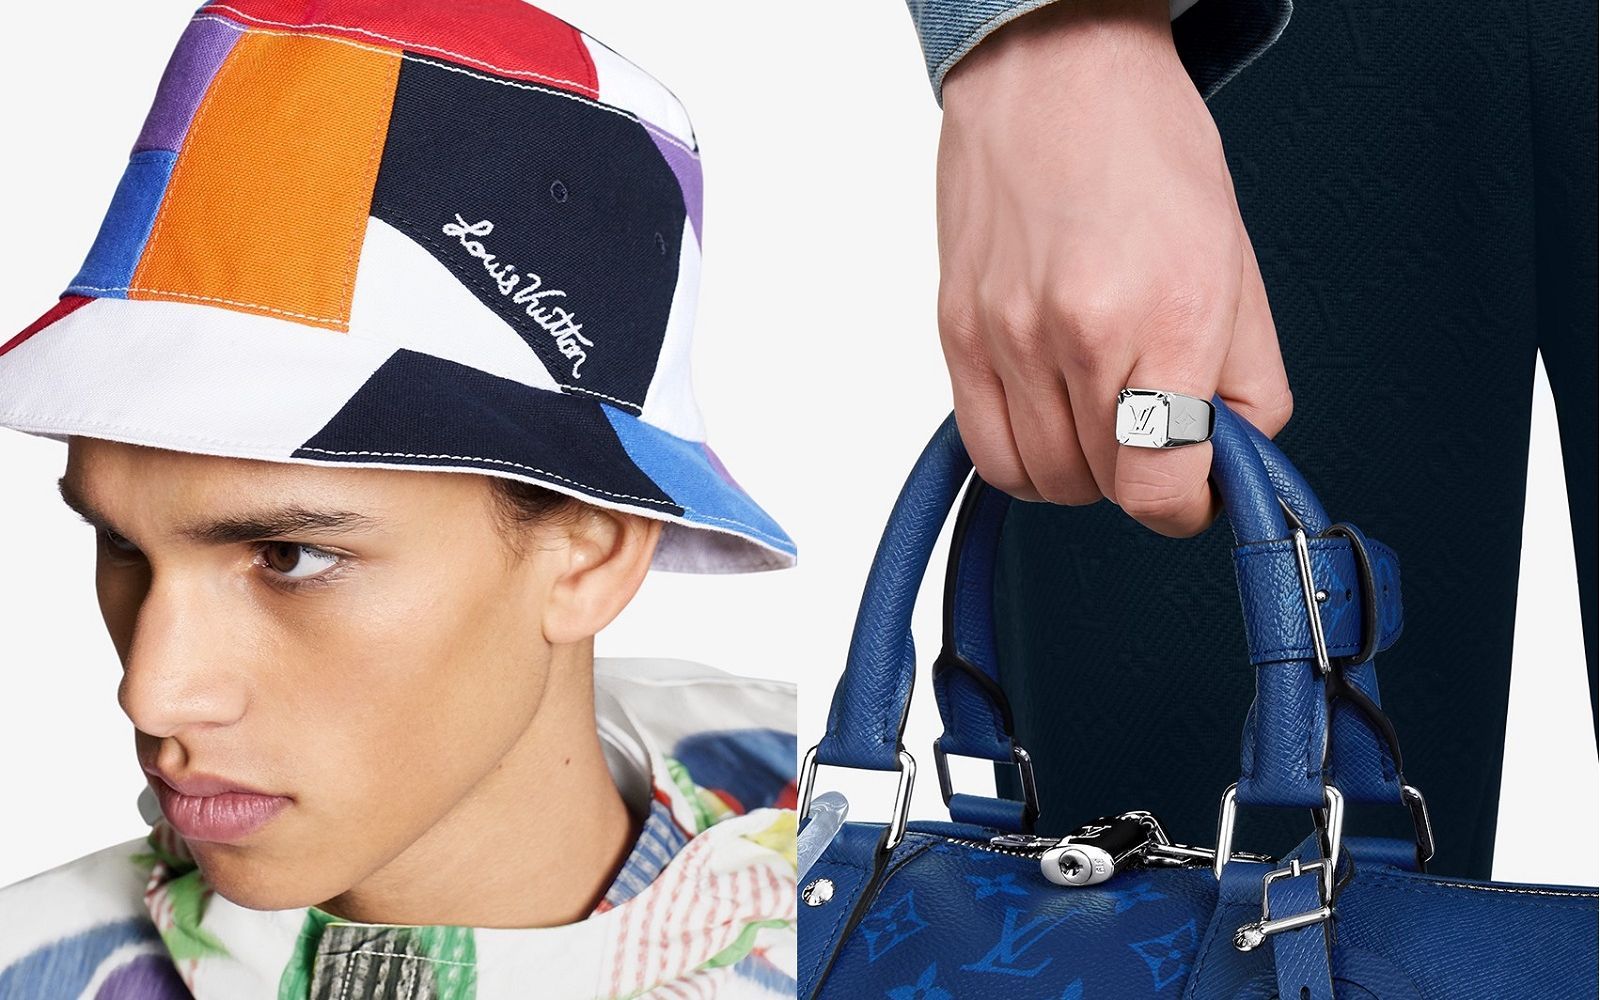 MSCHF Unveil Microscopic Louis Vuitton-styled Handbag for